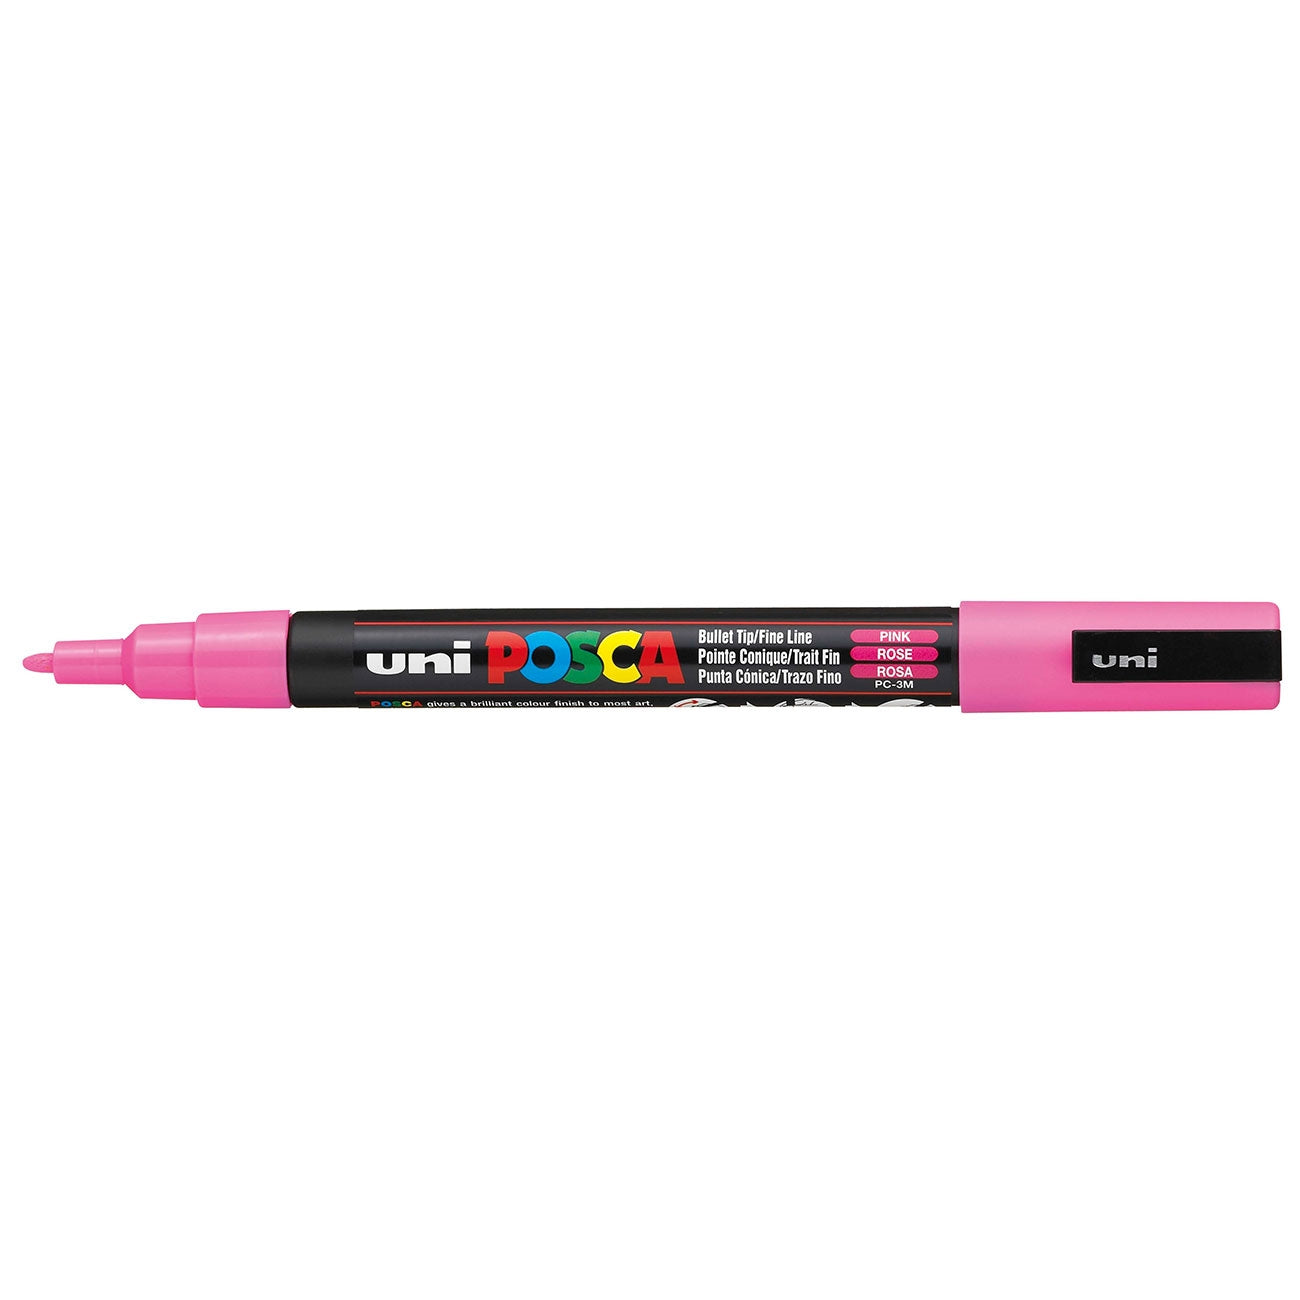 Shop Posca Pens & Markers